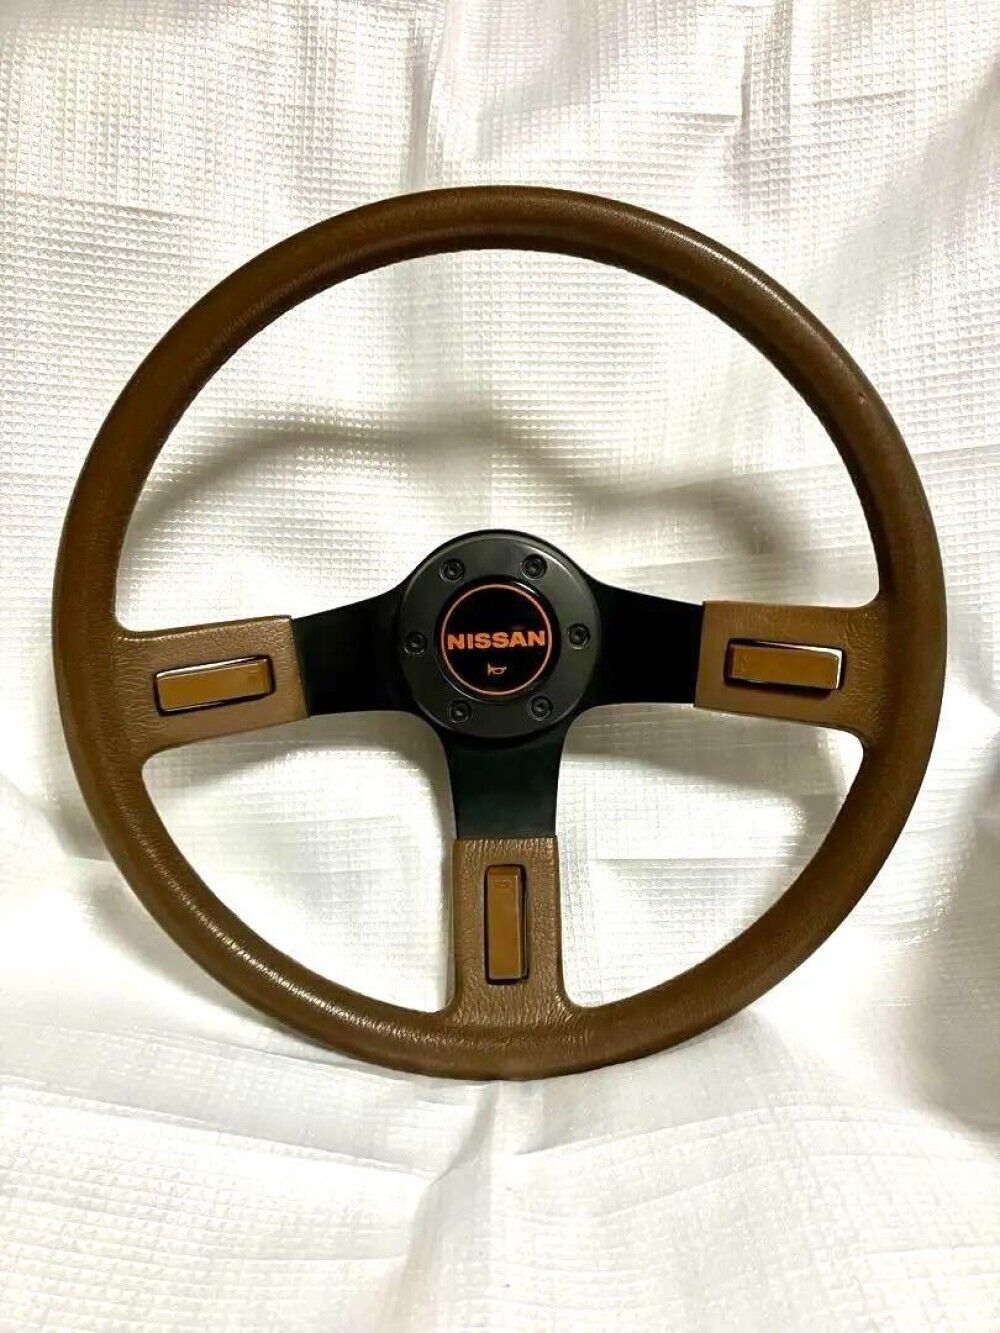 Nissan Safari, first generation 161 model, stock steering wheel